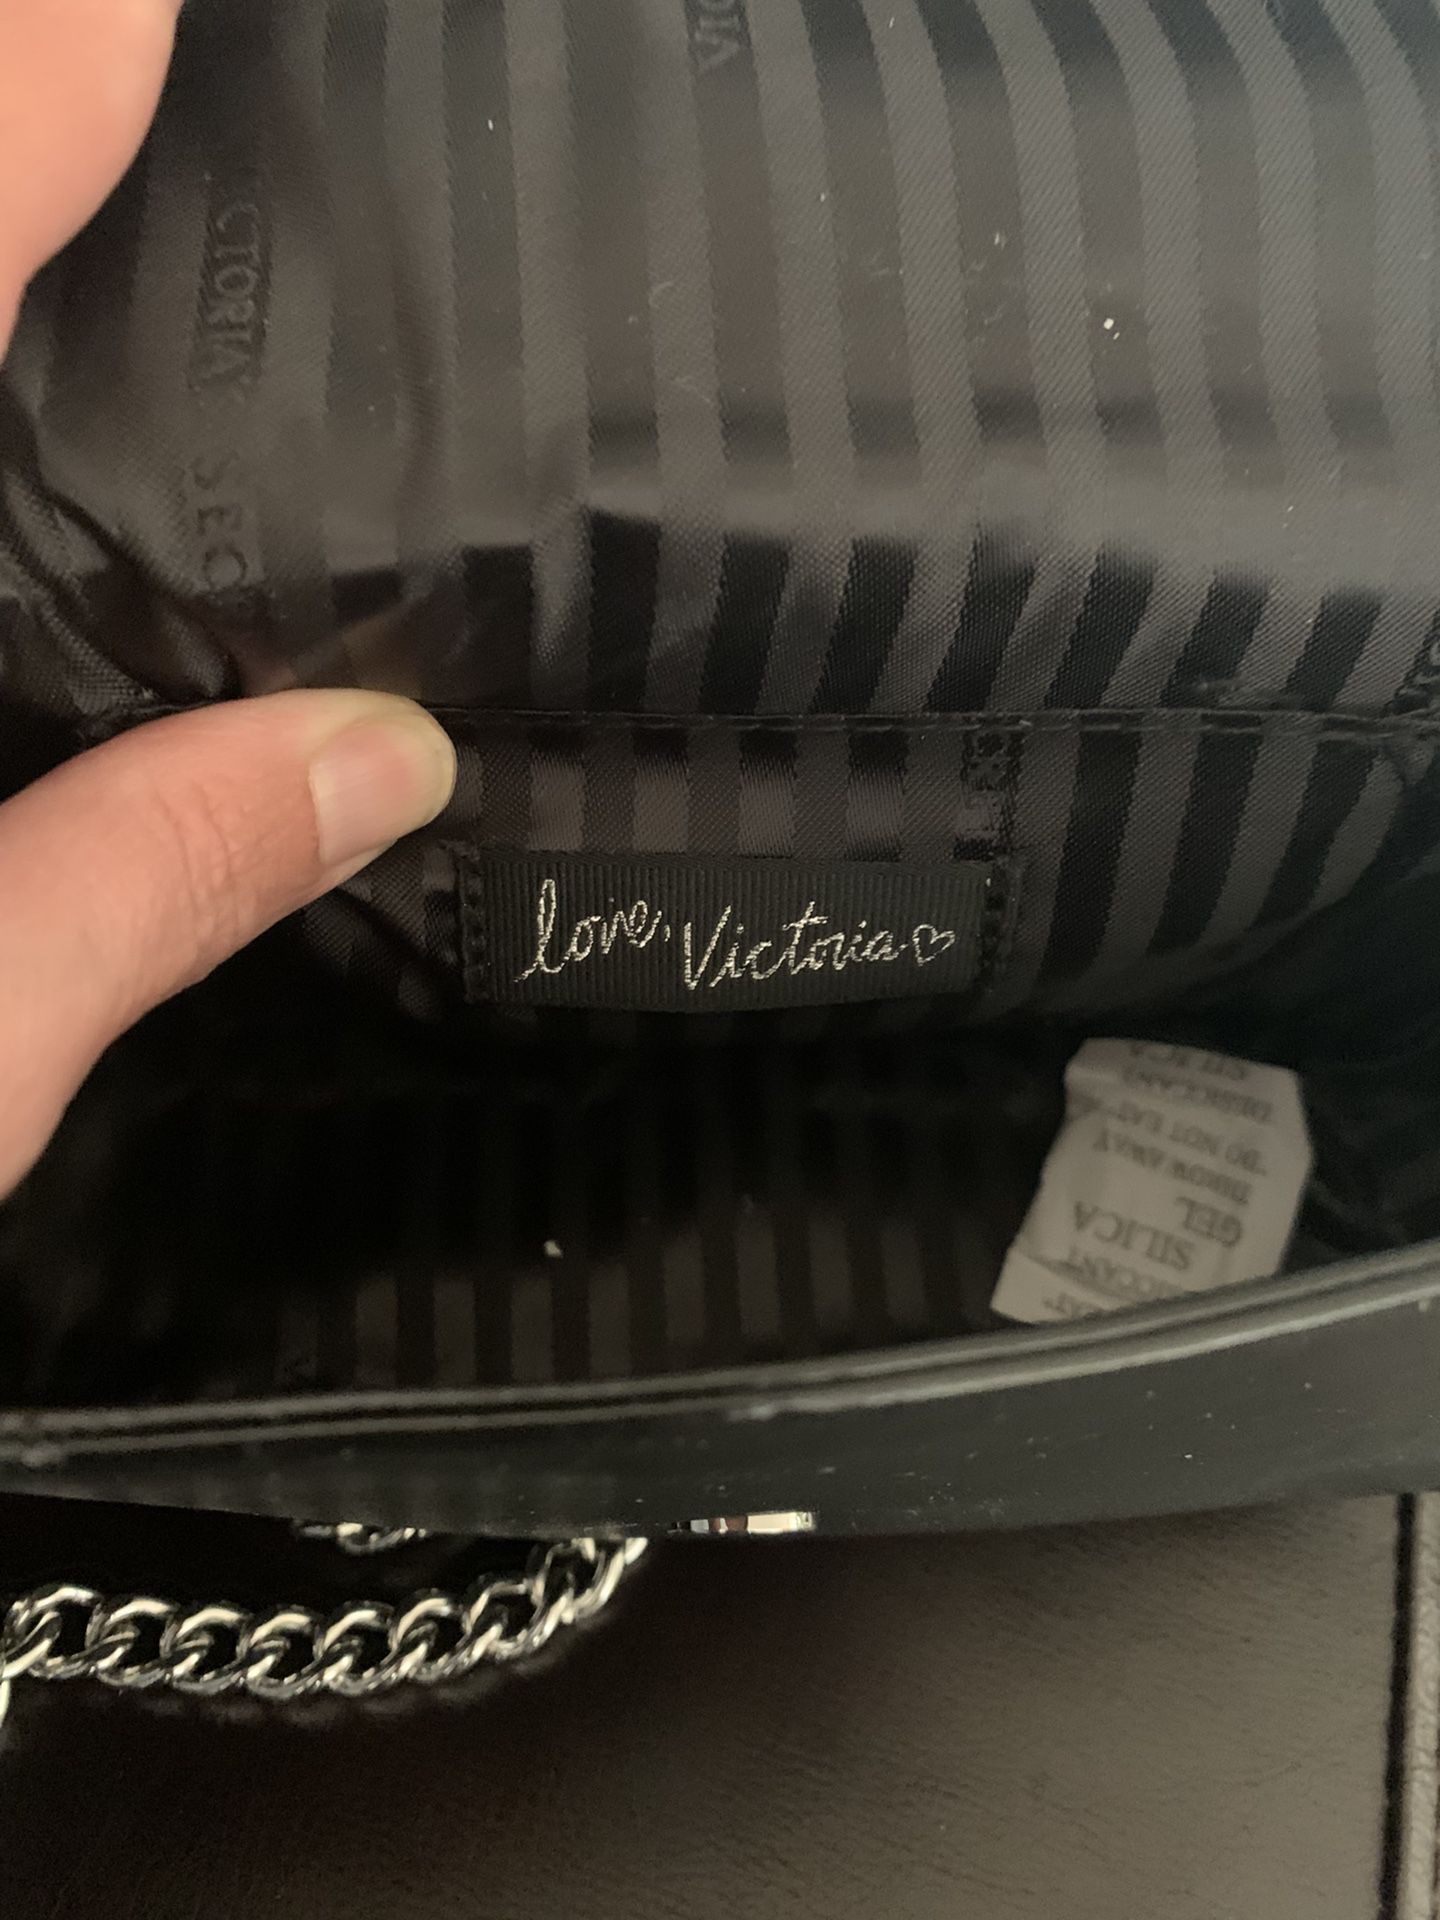 Rare Victoria's Secret Crossbody Bag for Sale in Tucson, AZ - OfferUp